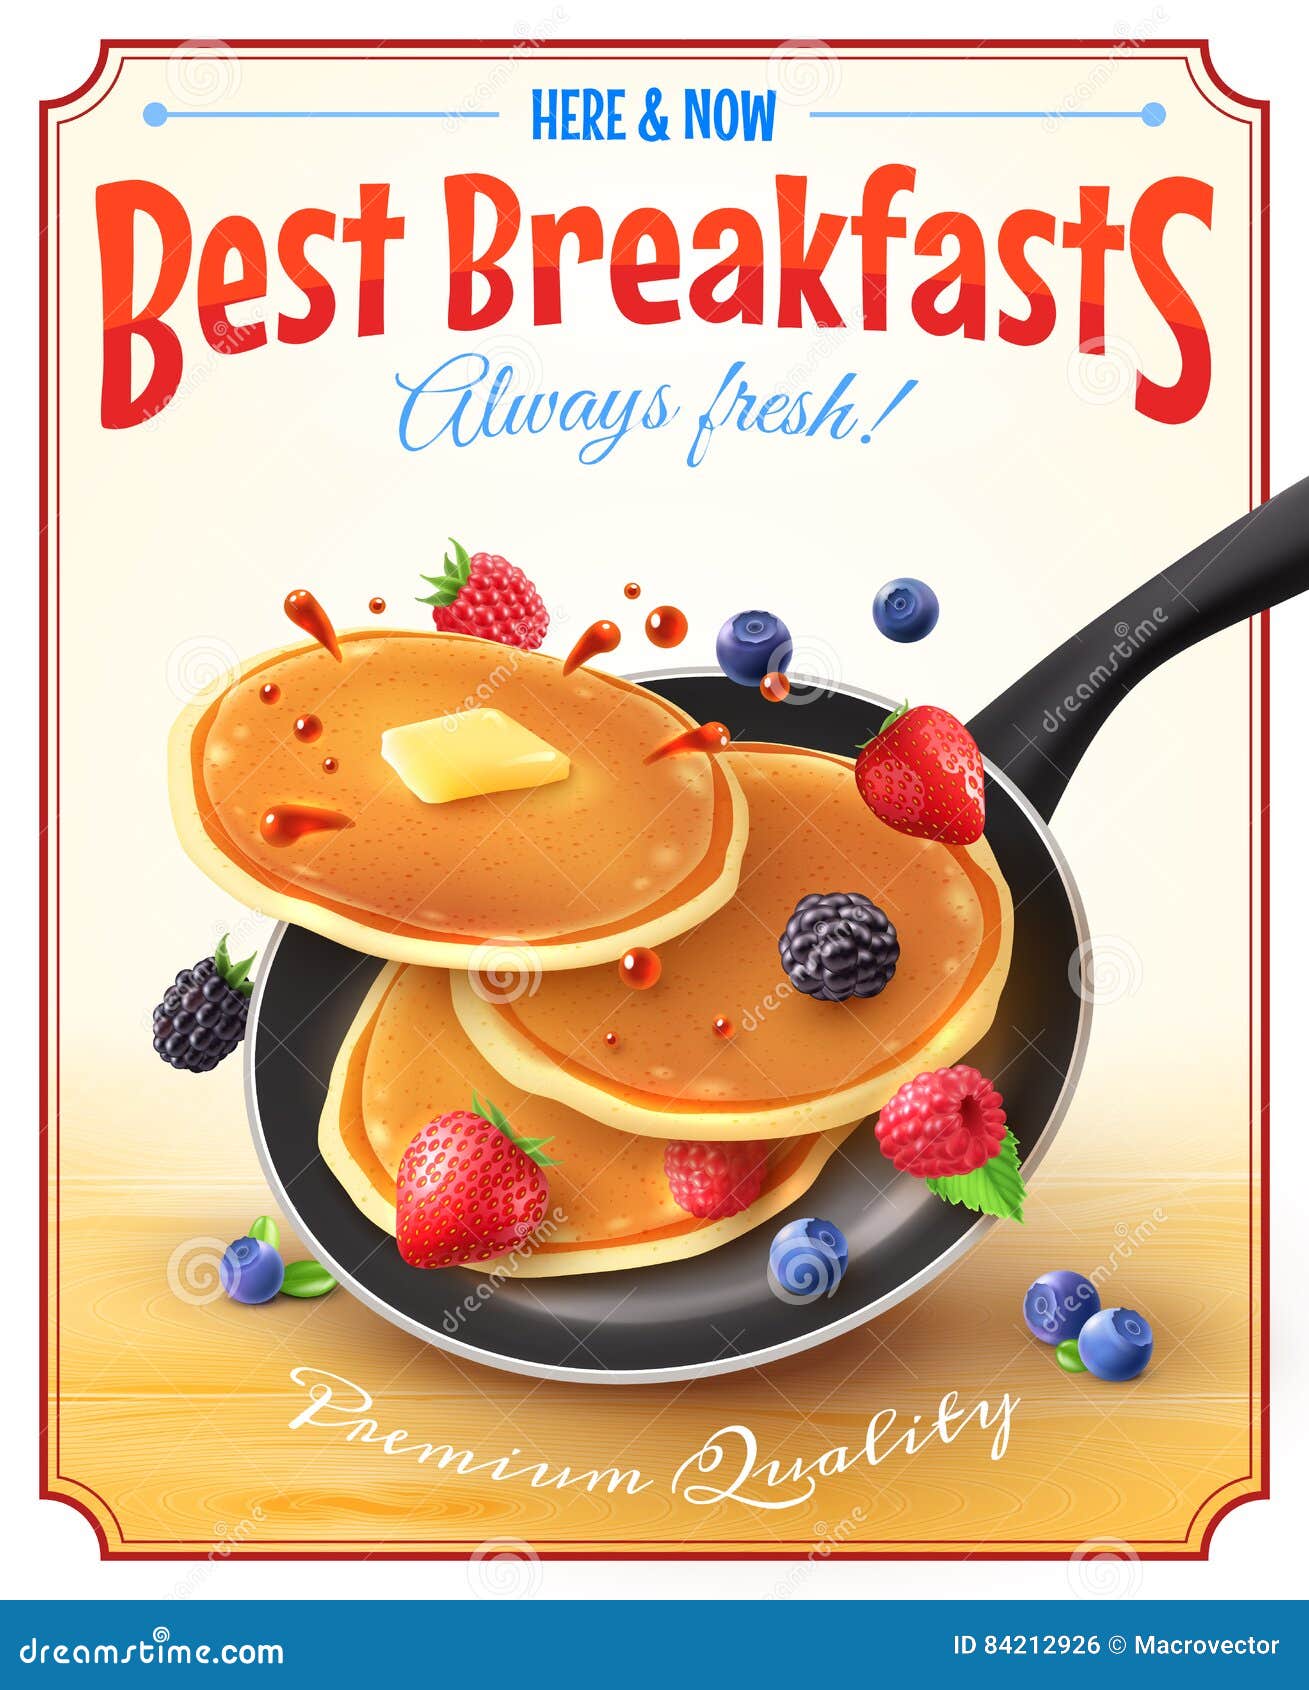 best breakfasts vintage advertisement poster